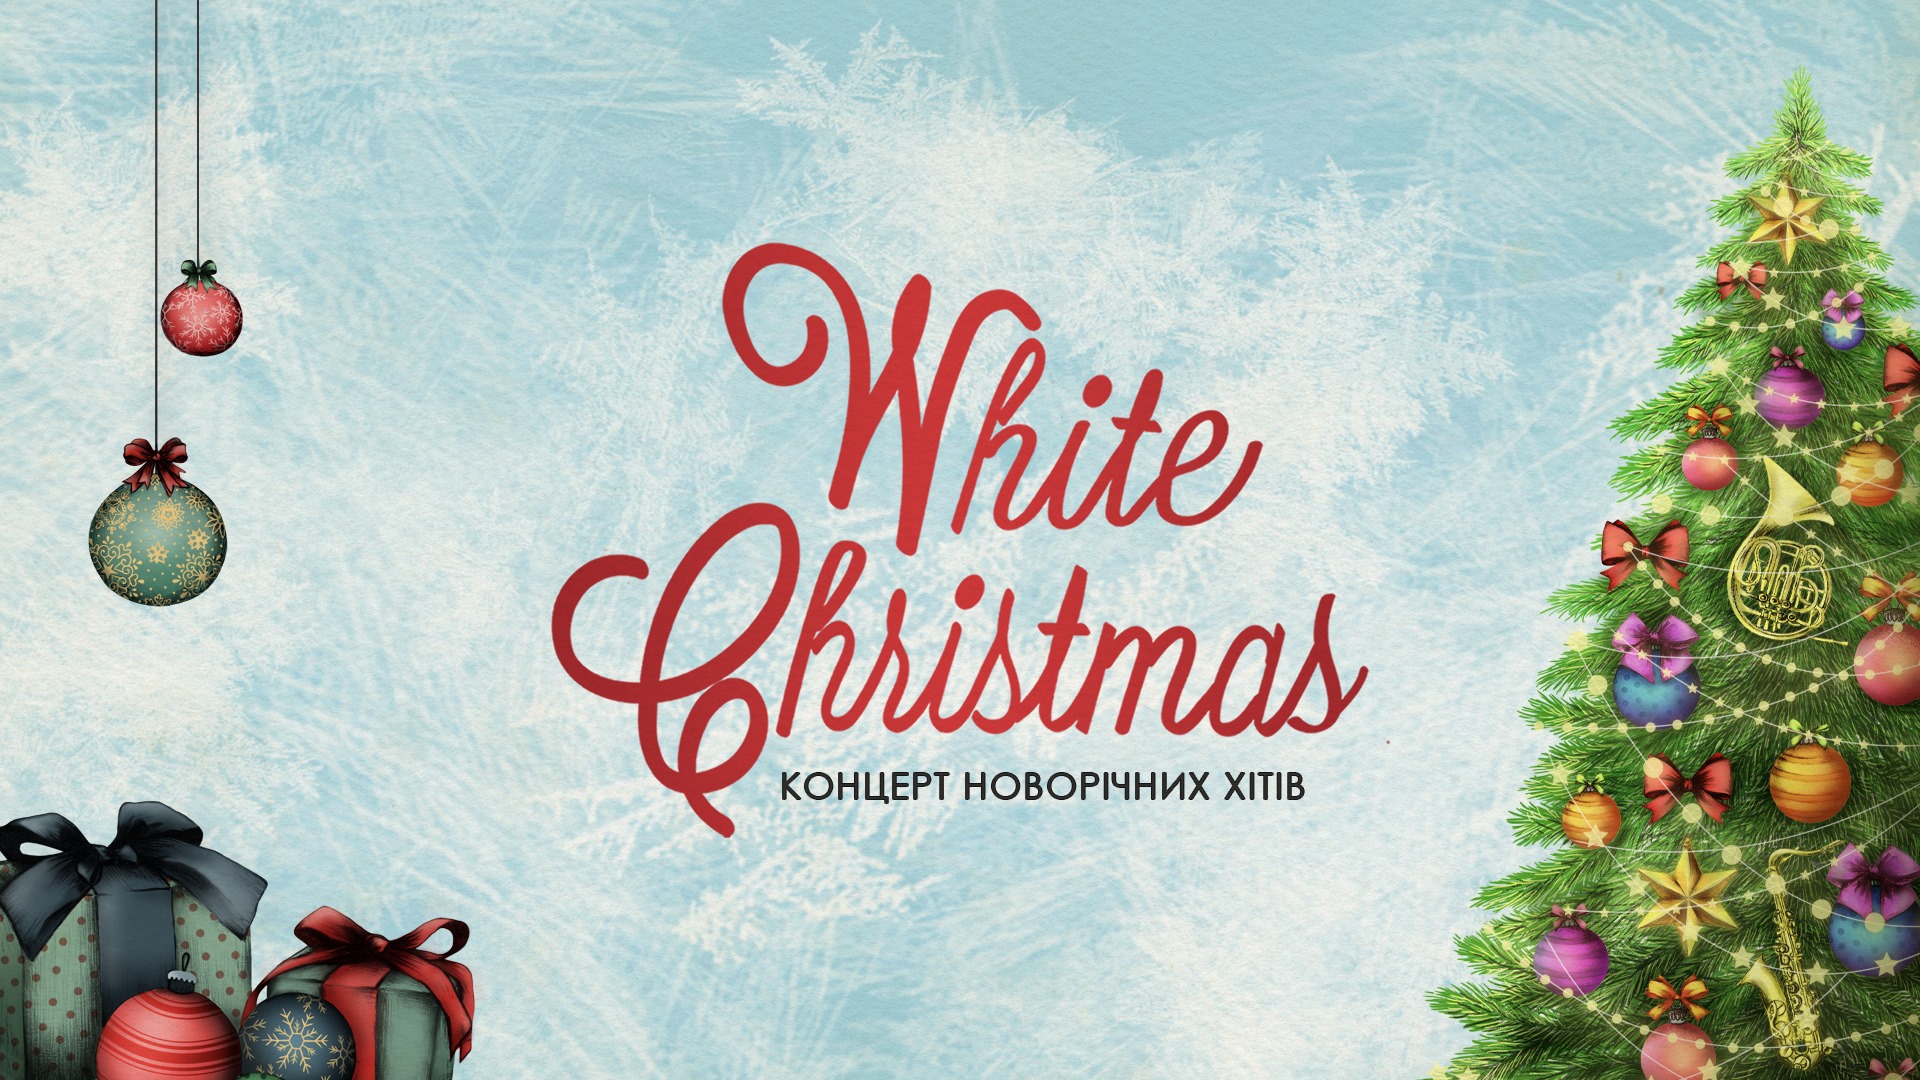 Концерт "White Christmas"